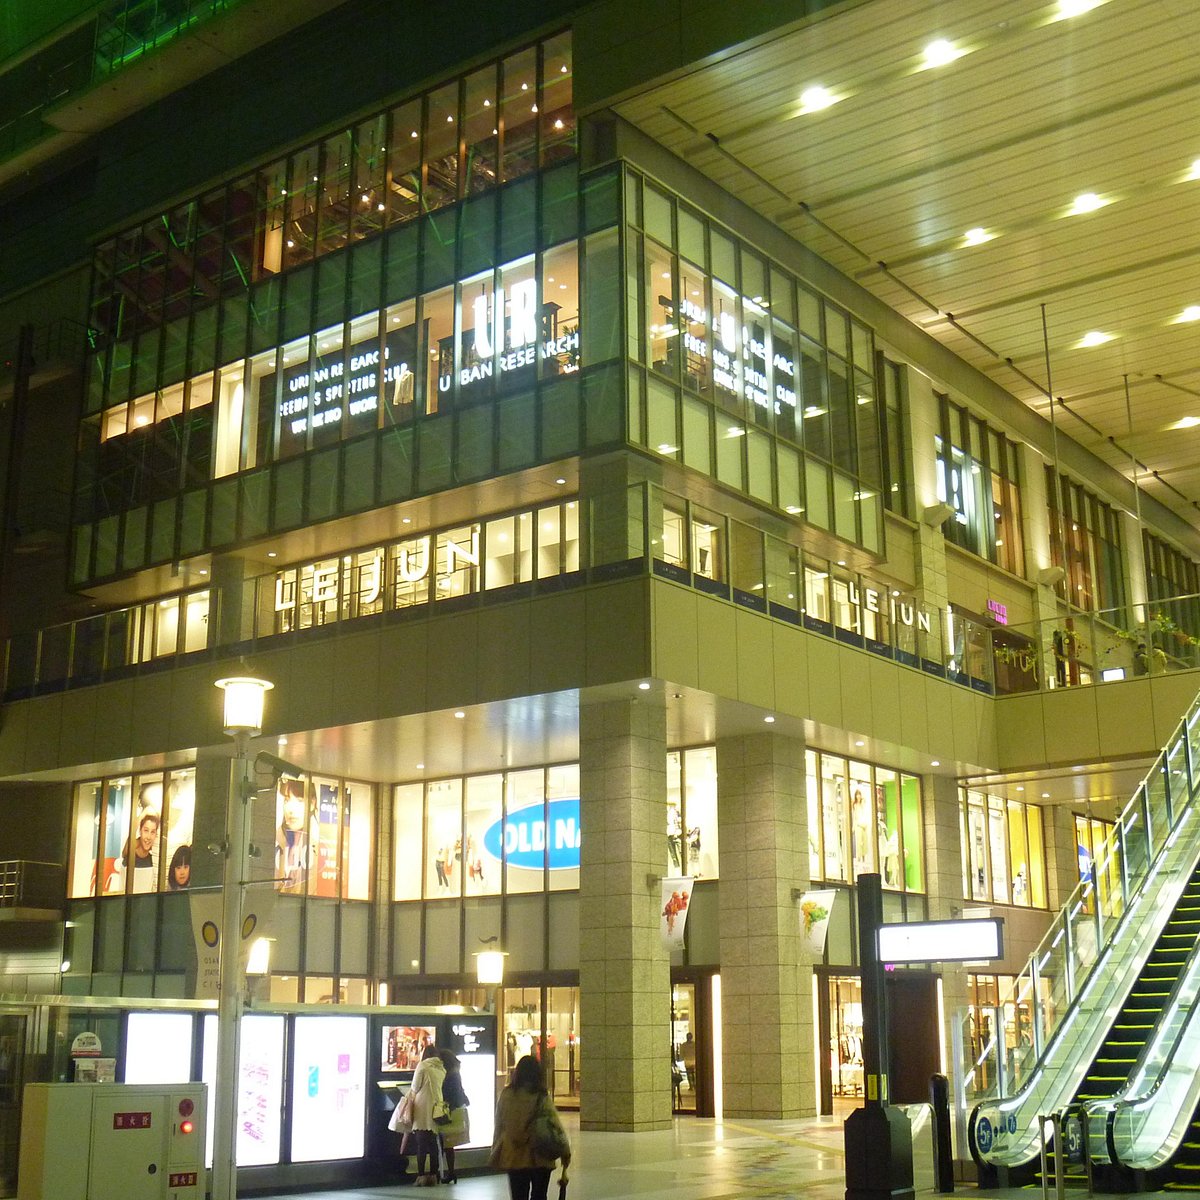 Osaka,Japan - June 25, 2017: Hankyu Department Store Osaka Umeda